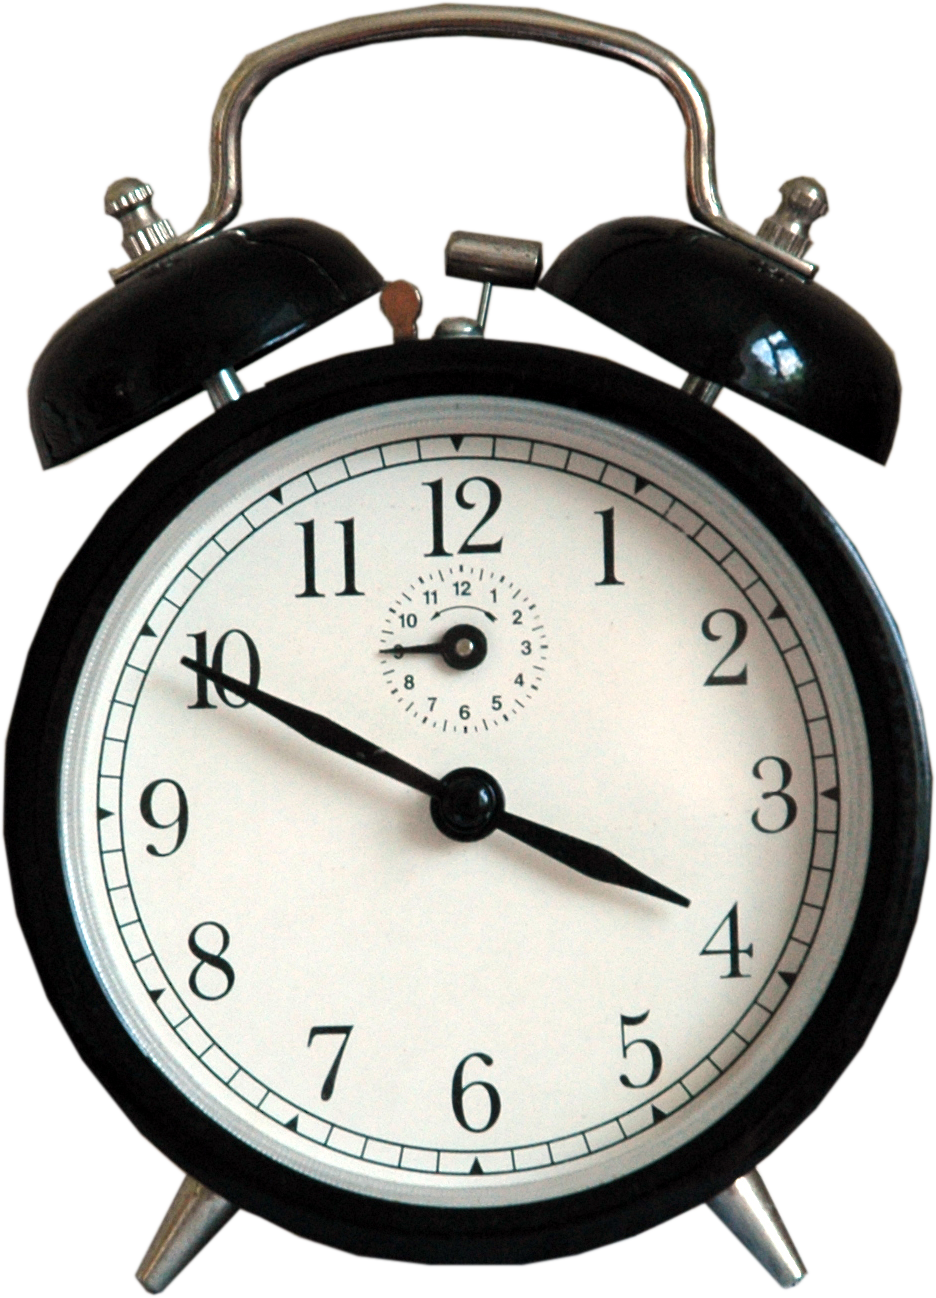 Download PNG image - Analog Alarm Clock PNG Image 